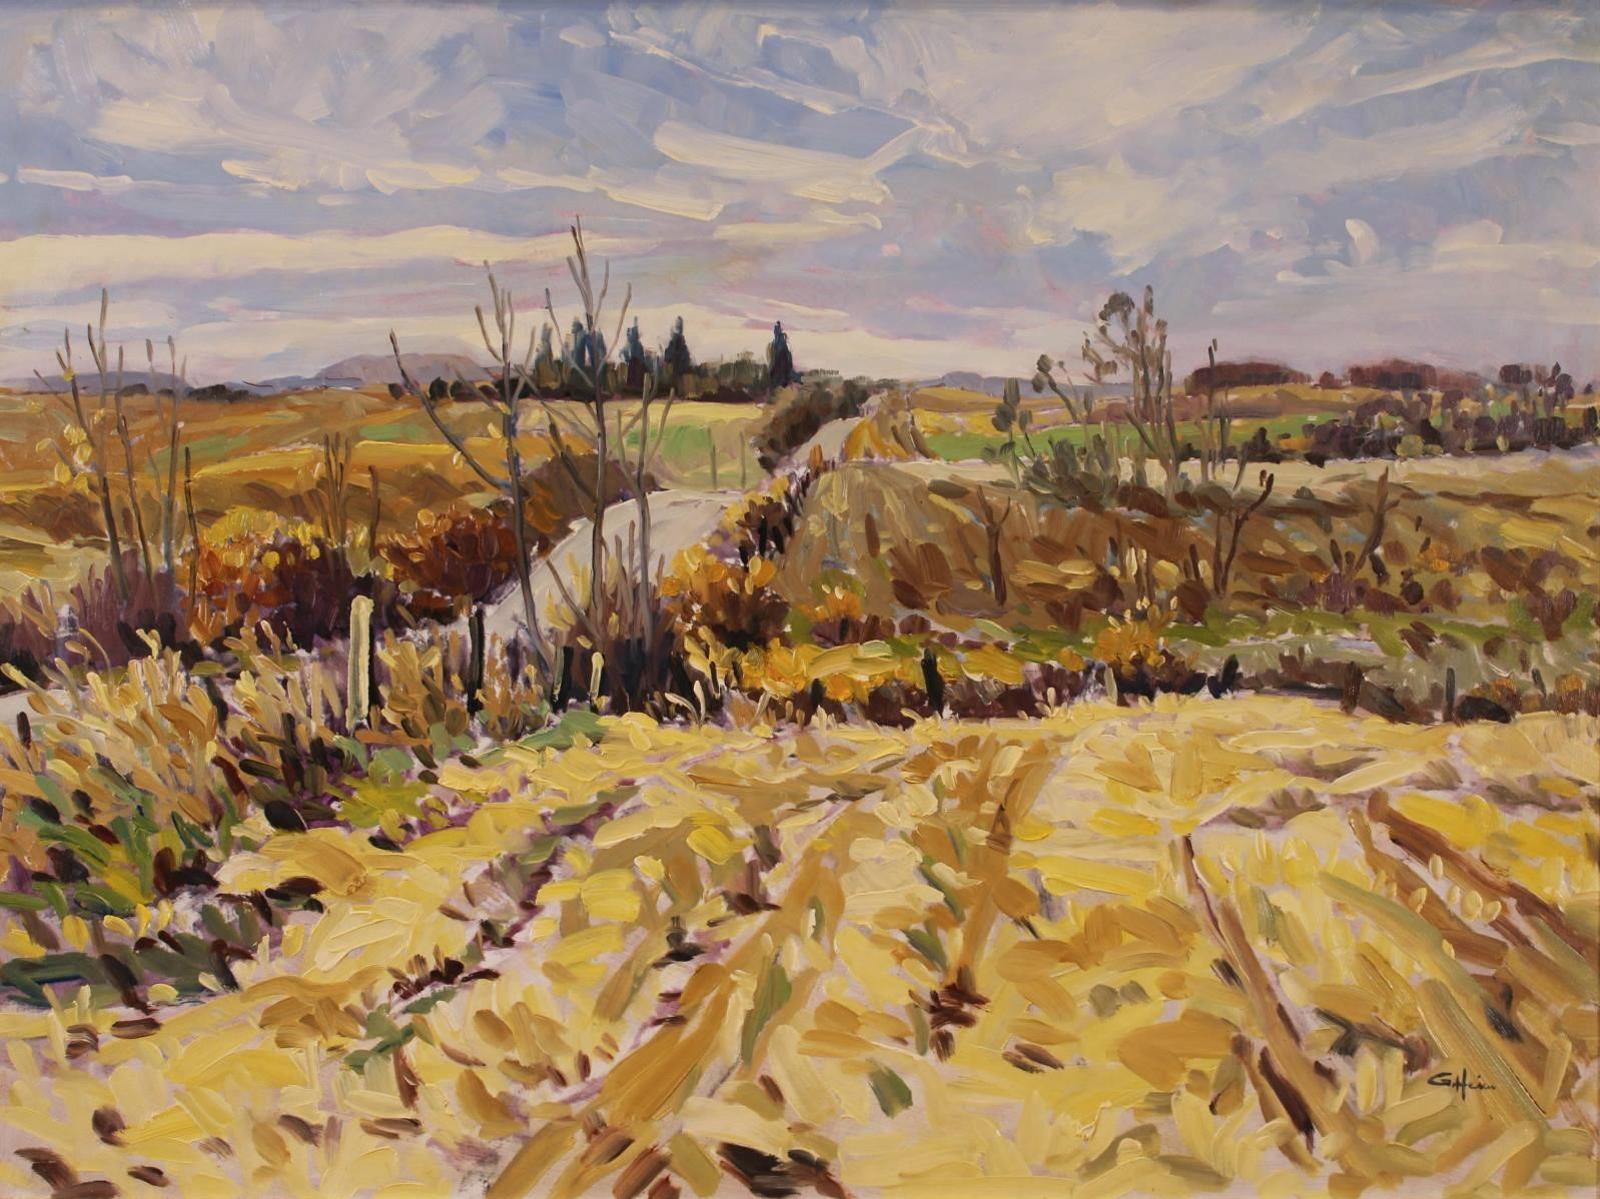 Guenter Heim (1935-2014) - After the Harvest